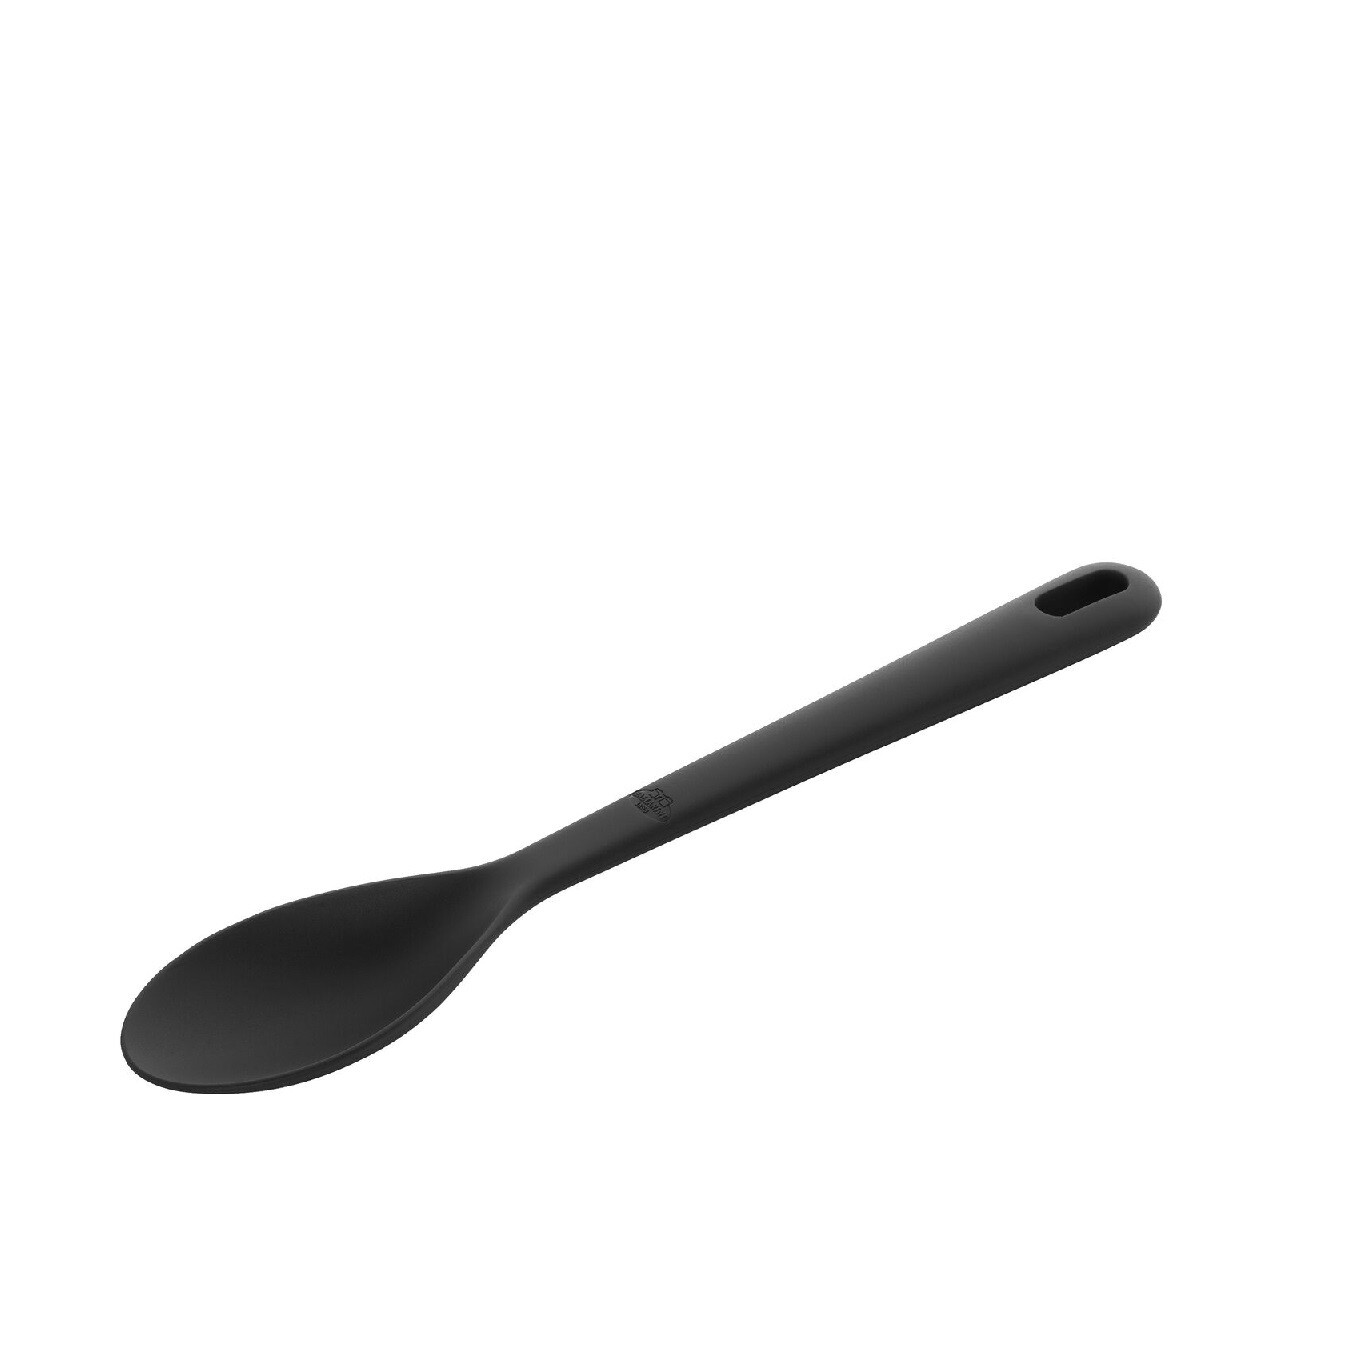 BALLARINI 'nero' serveerlepel 28cm silicone zwart  PROMO 9,95 -3,00